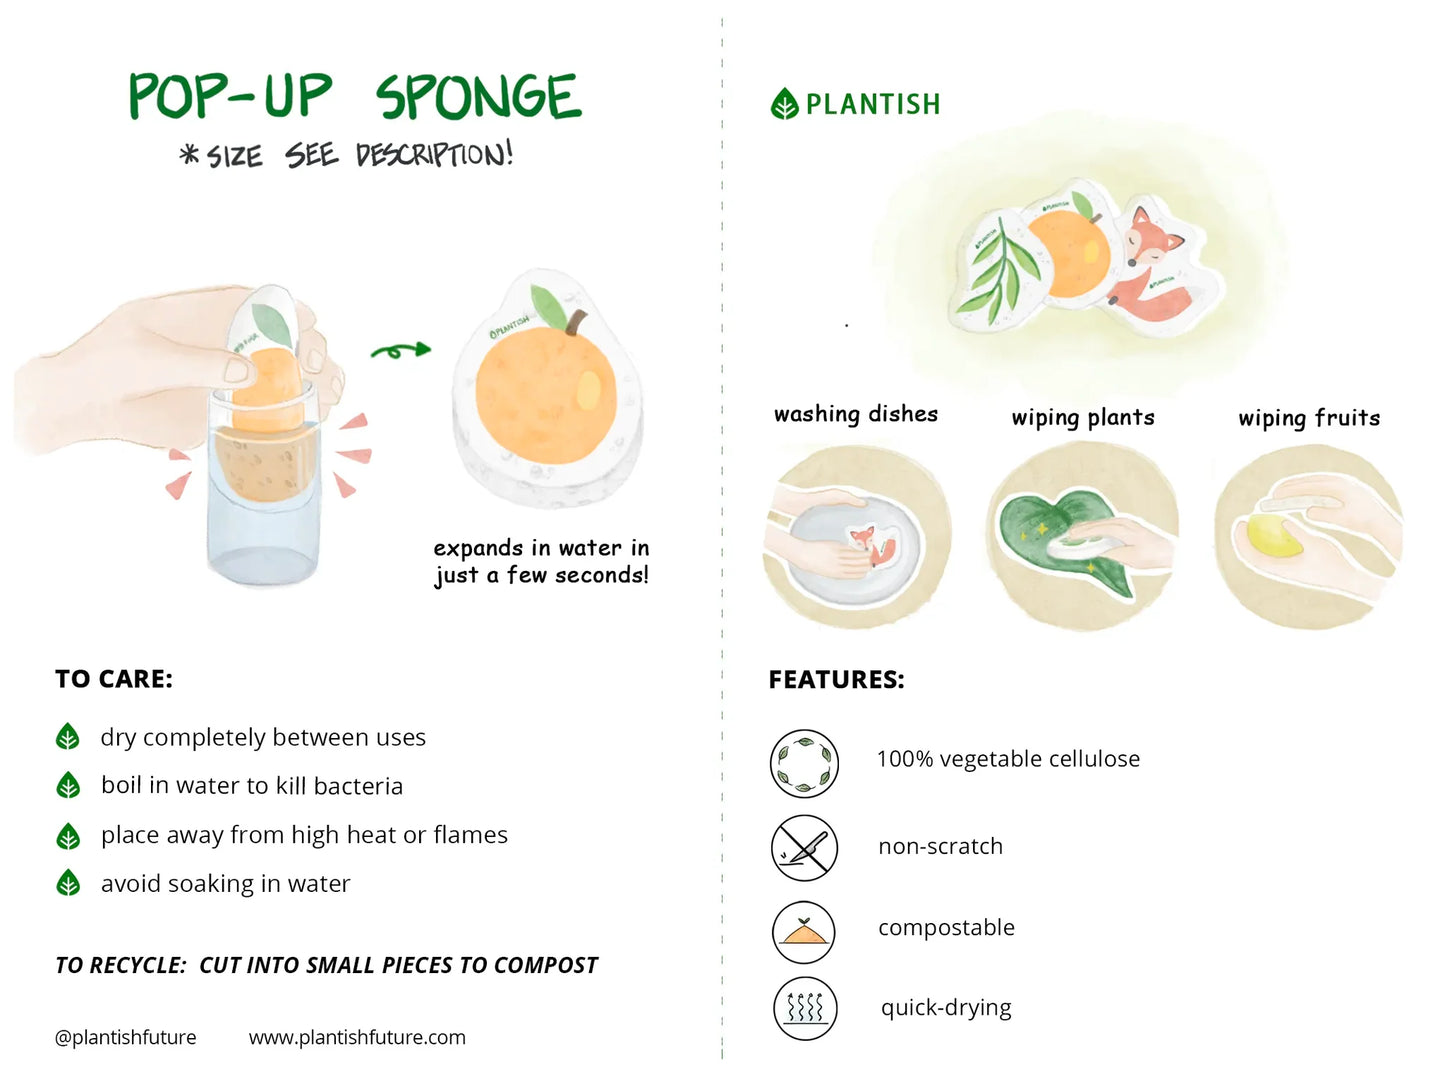 Orange Plastic-free Pop-up Sponge